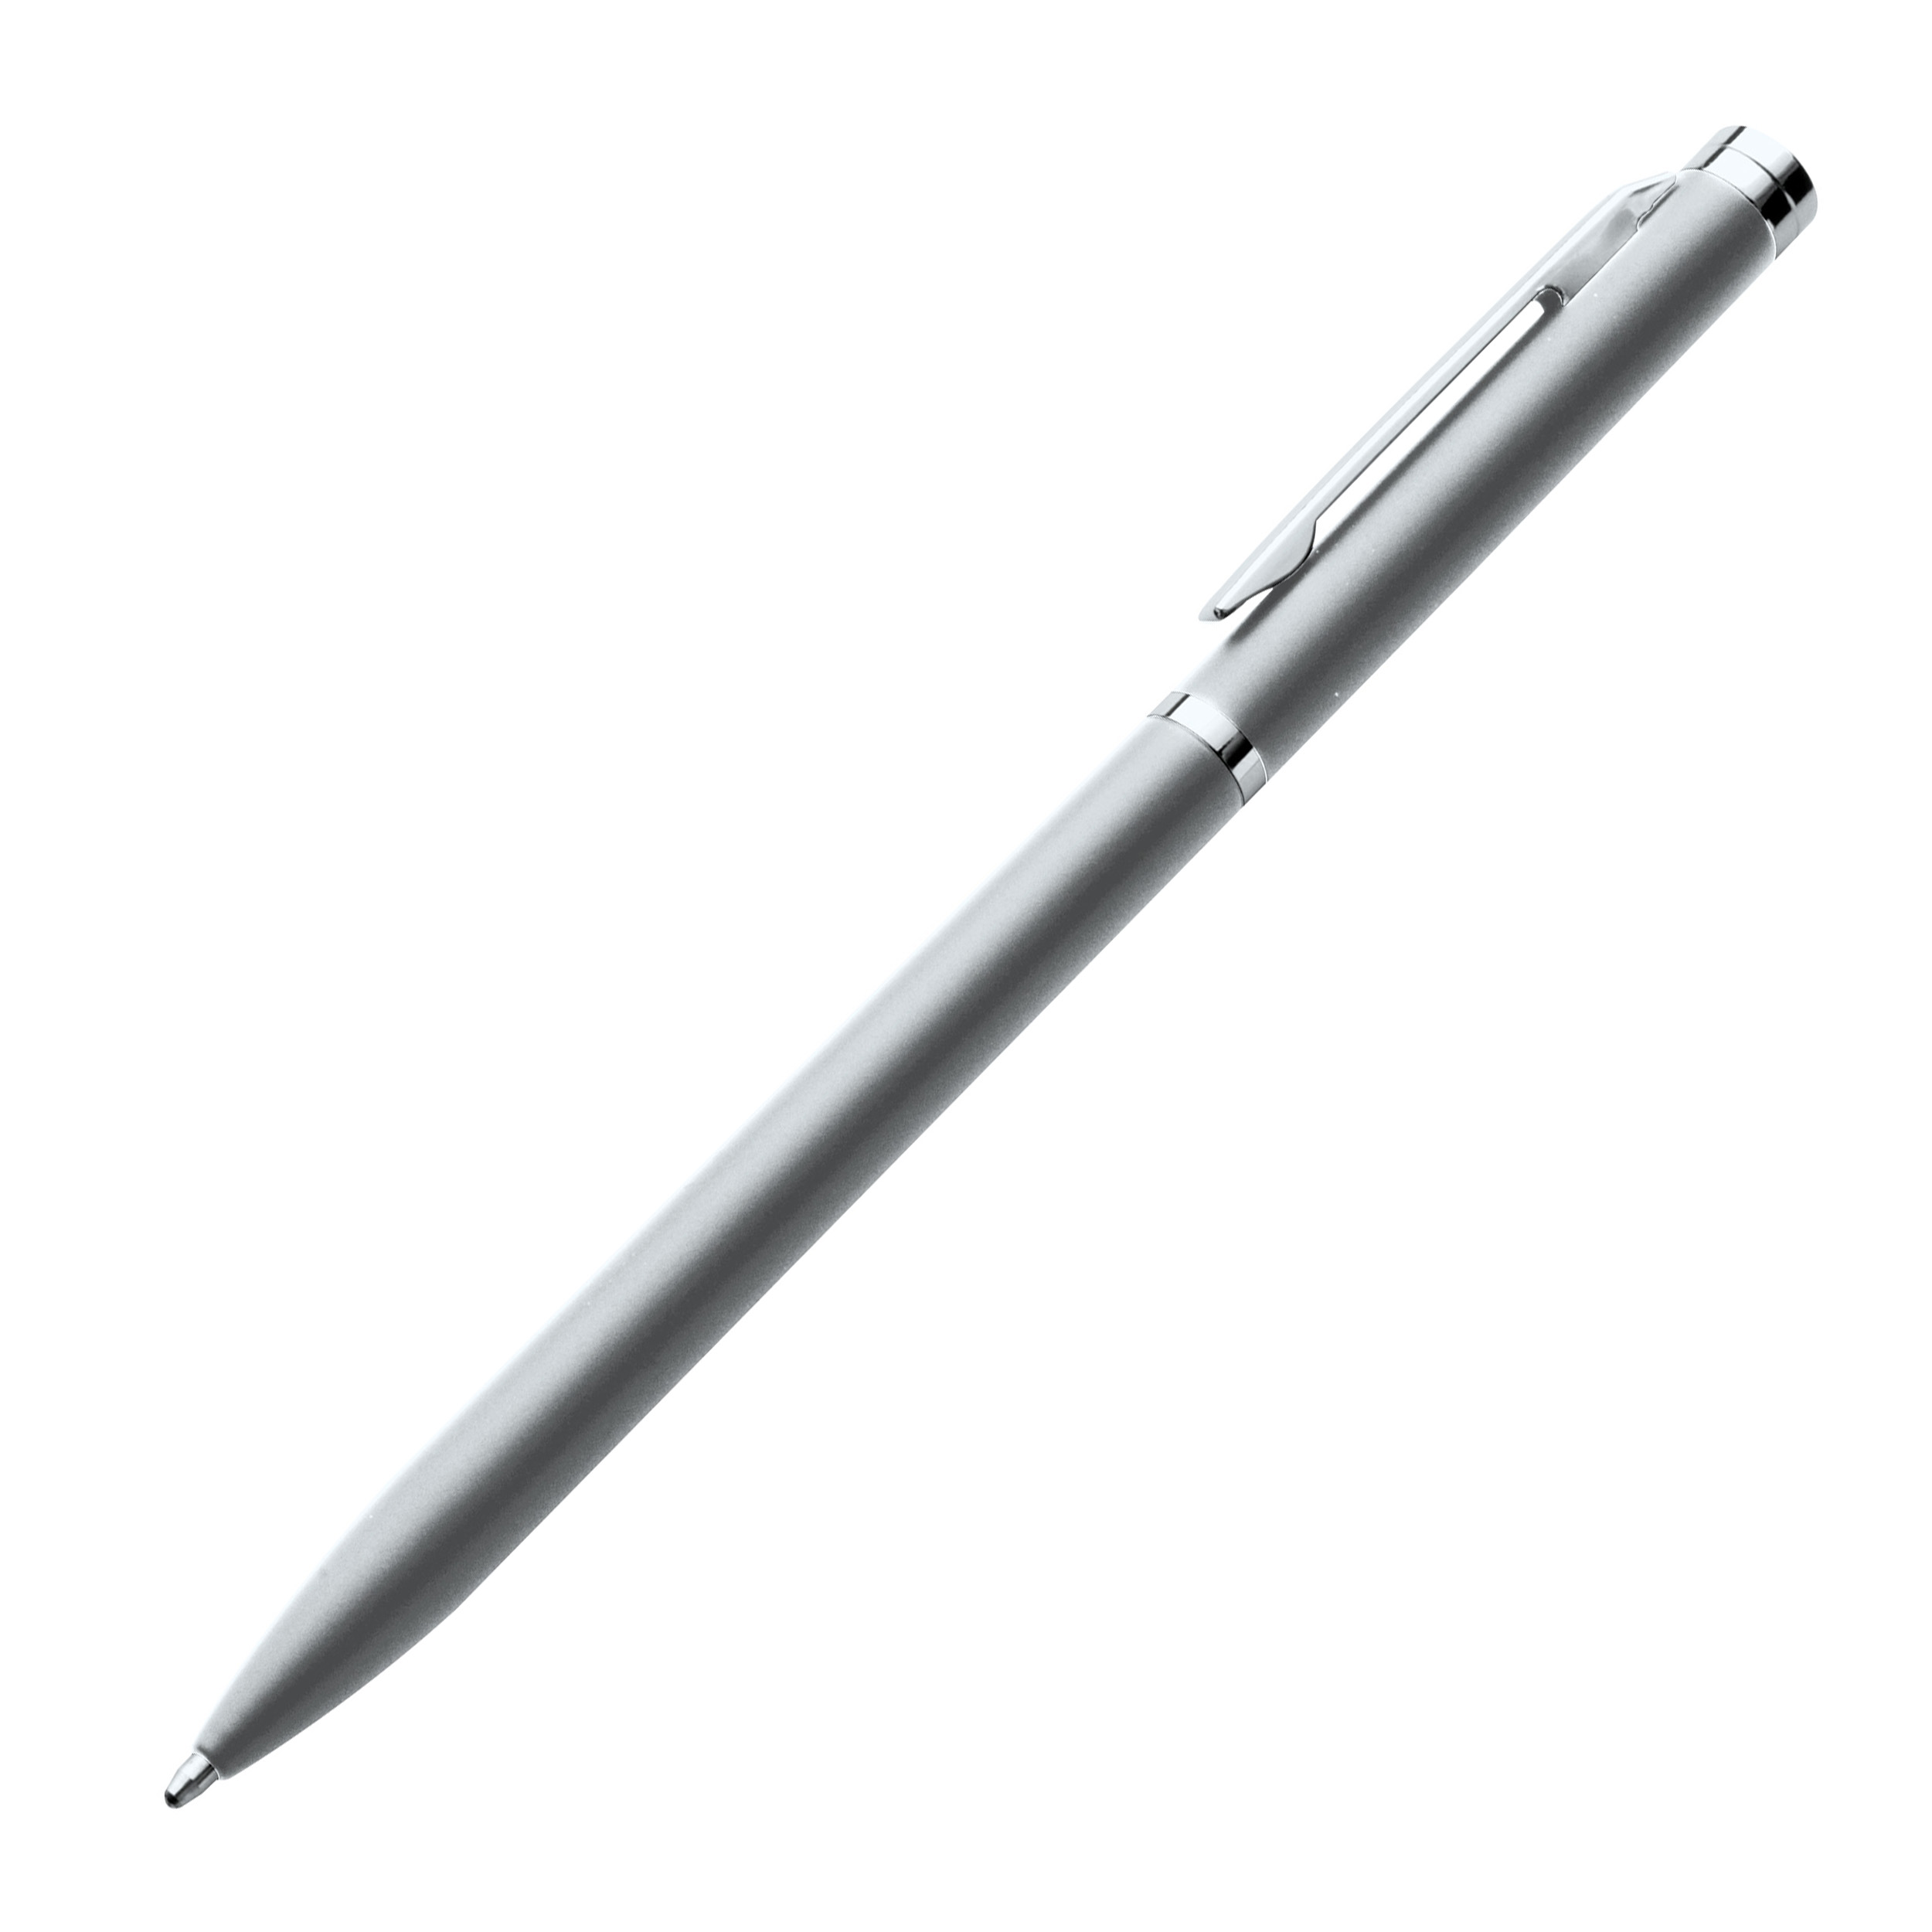 Metall Kugelschreiber in schlanker Form